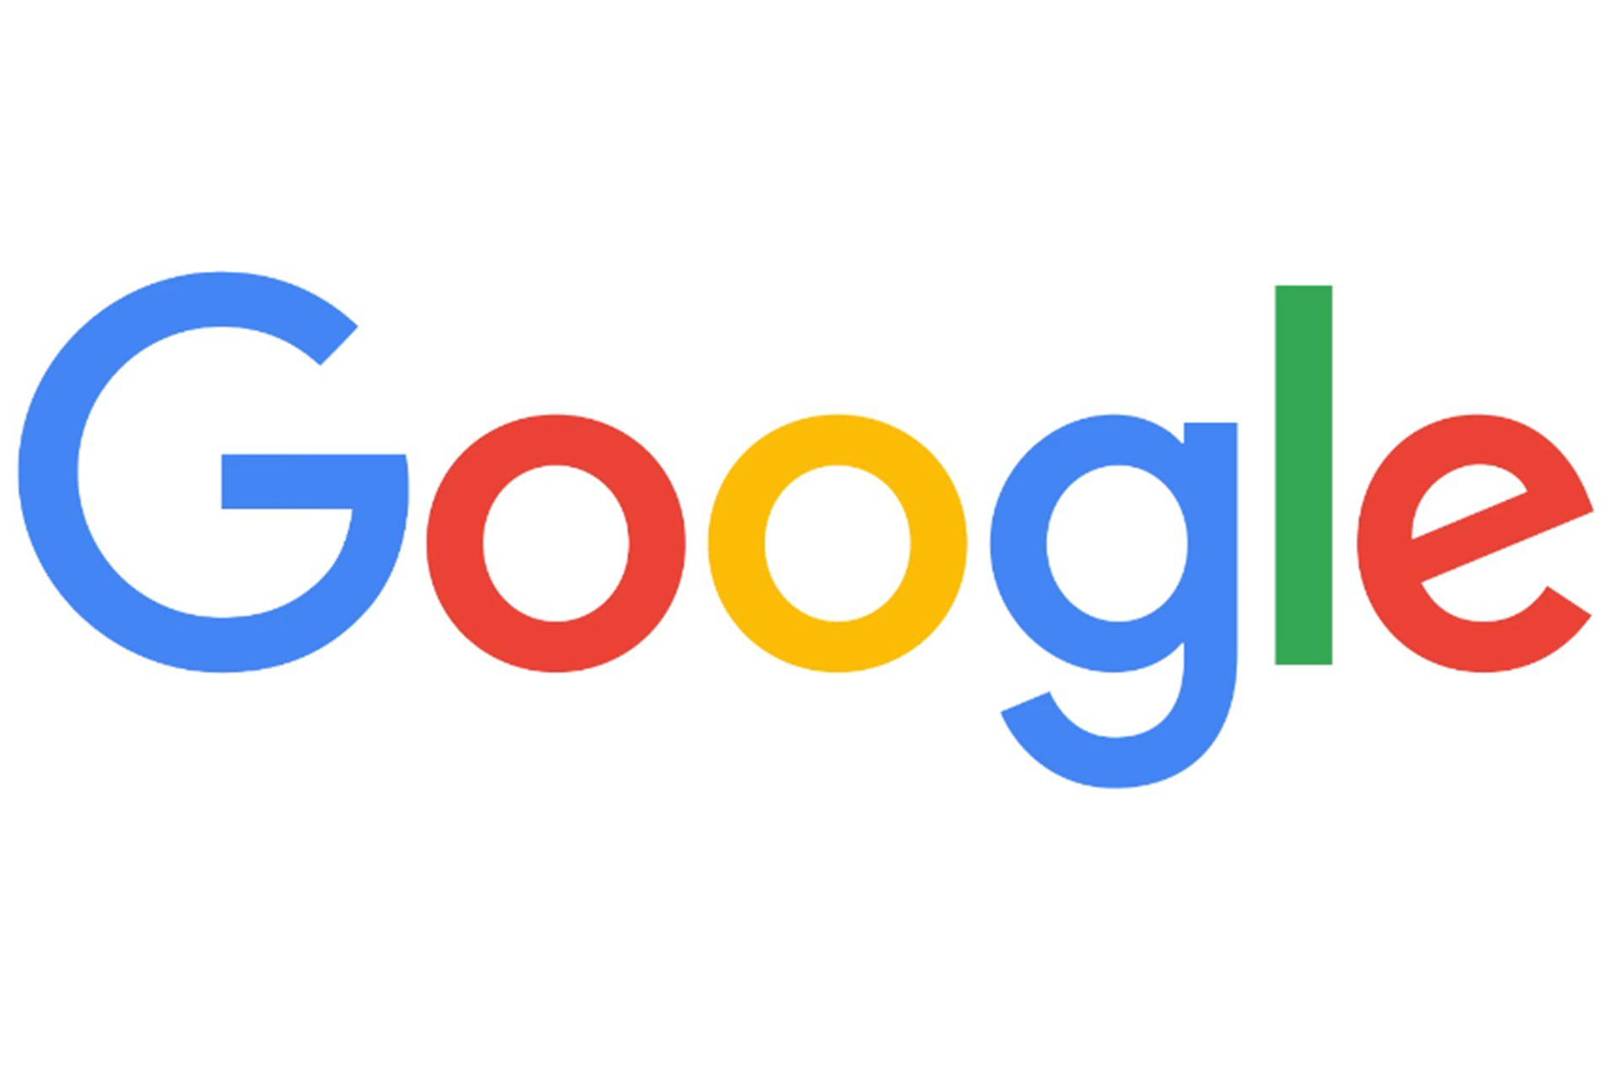 Gooogle Logo - Google makes logo history, and it's. round